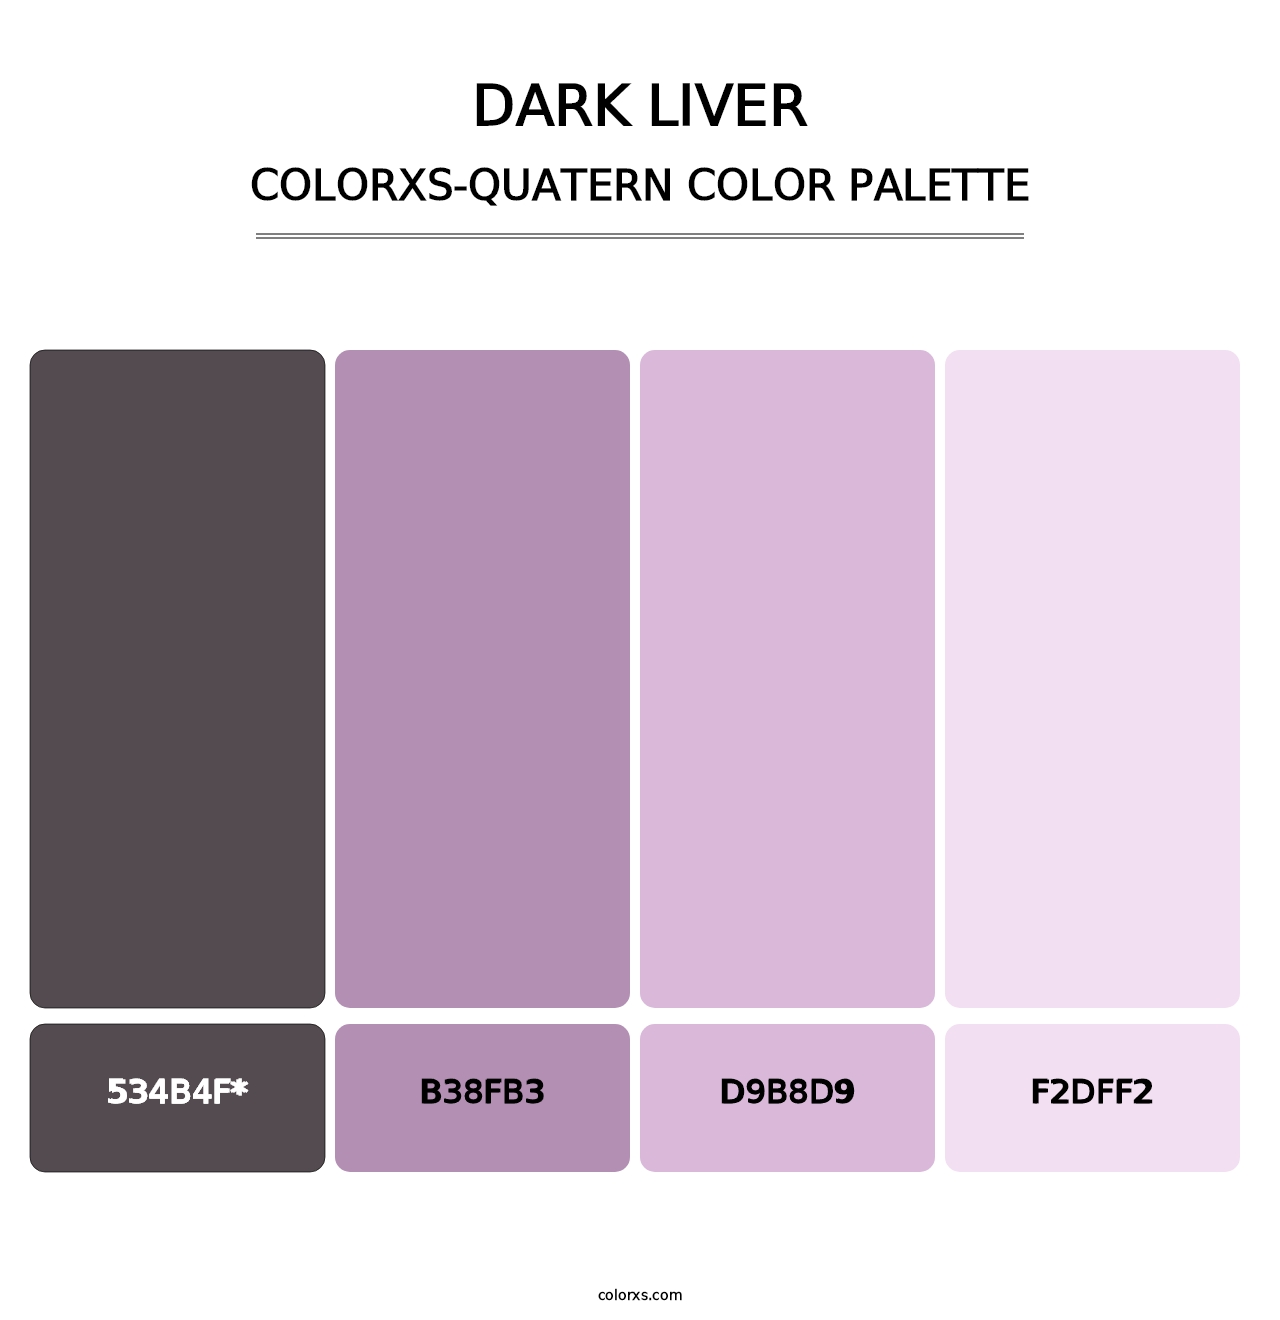 Dark Liver - Colorxs Quatern Palette